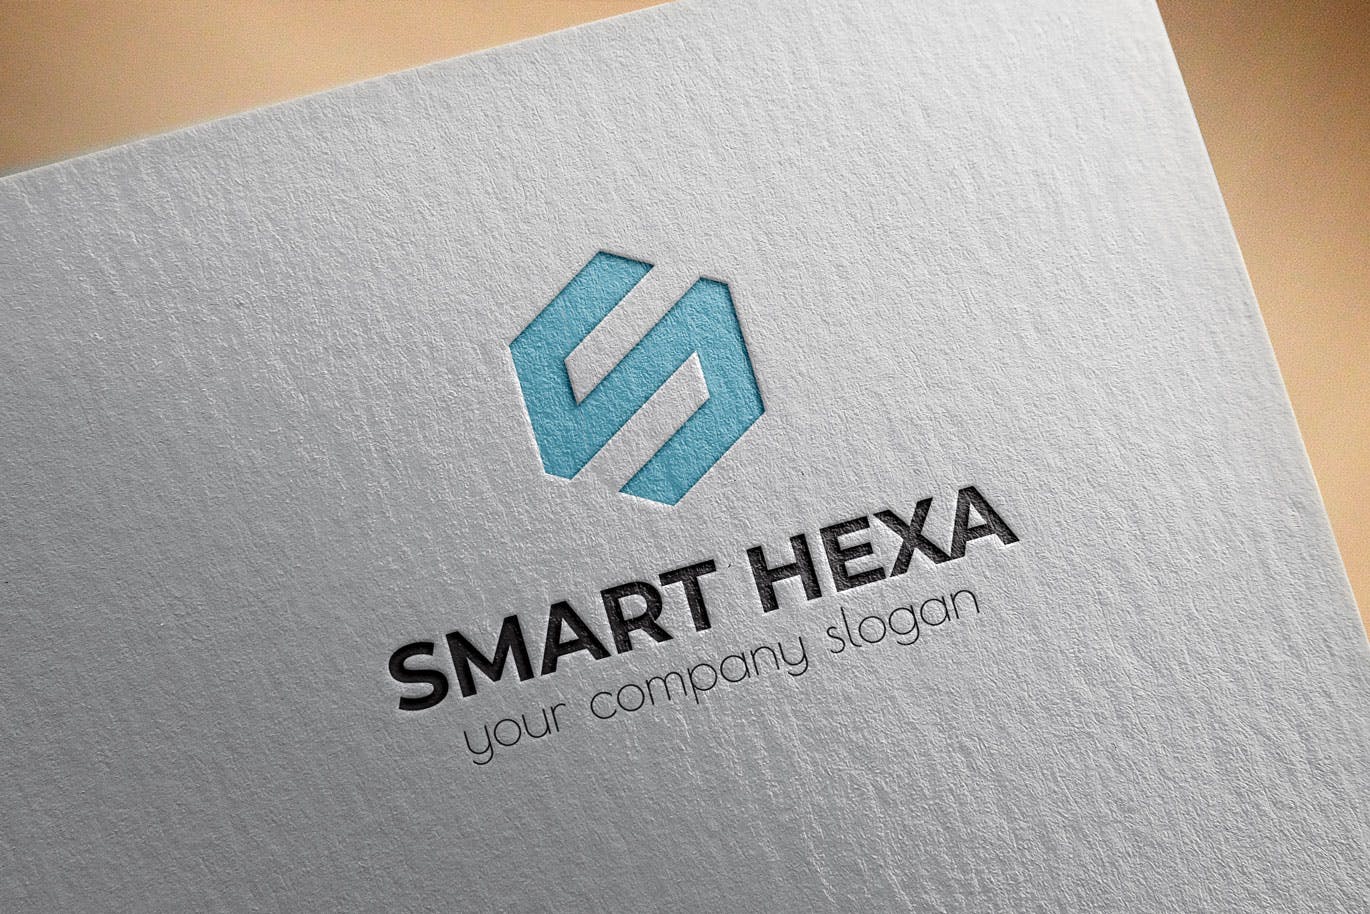 S字母图形Logo设计第一素材精选模板 Smart Hexa Awesome Logo Template插图(2)